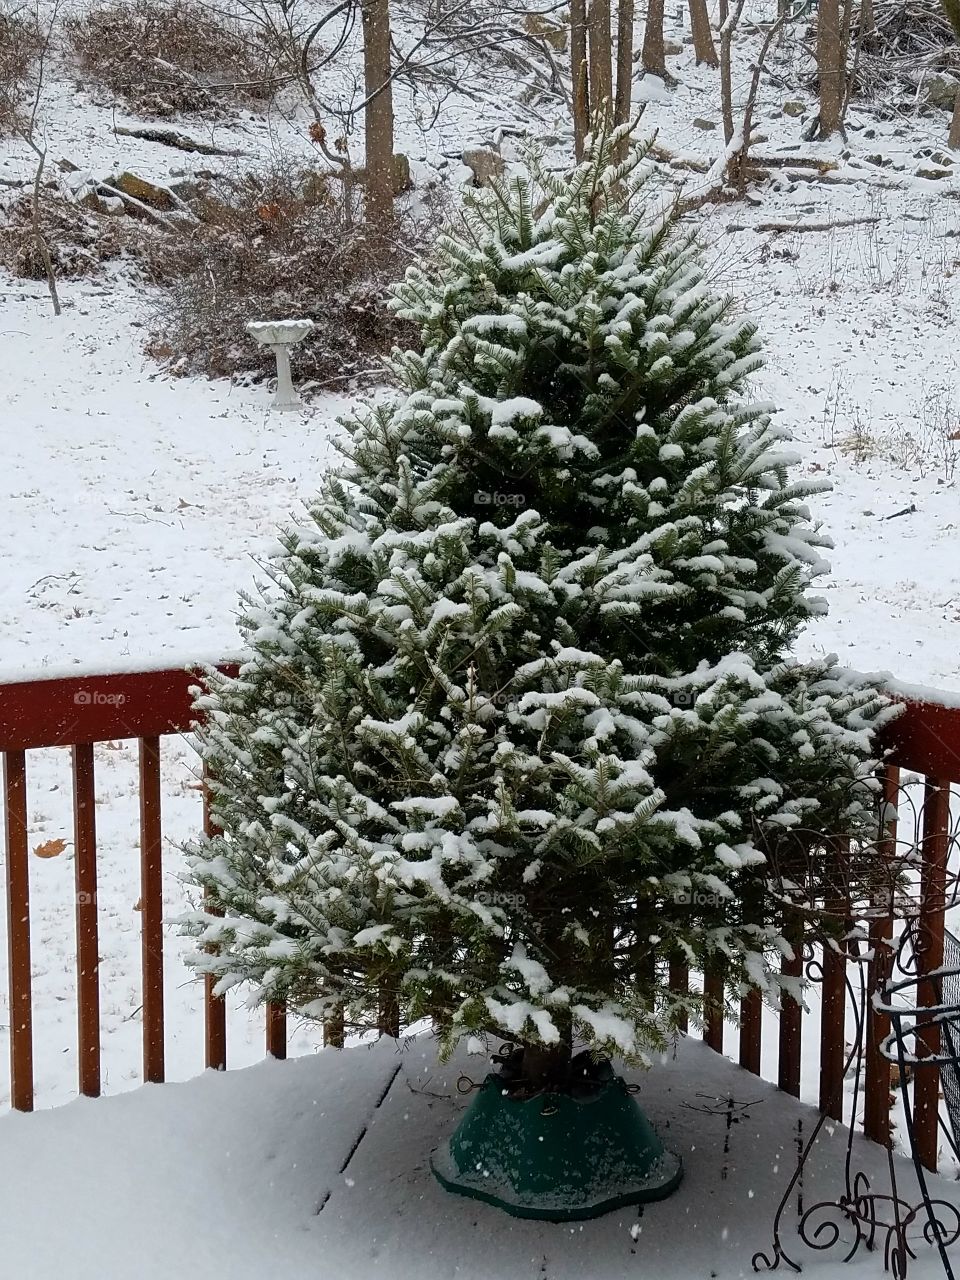 Snowing on Christmas tree